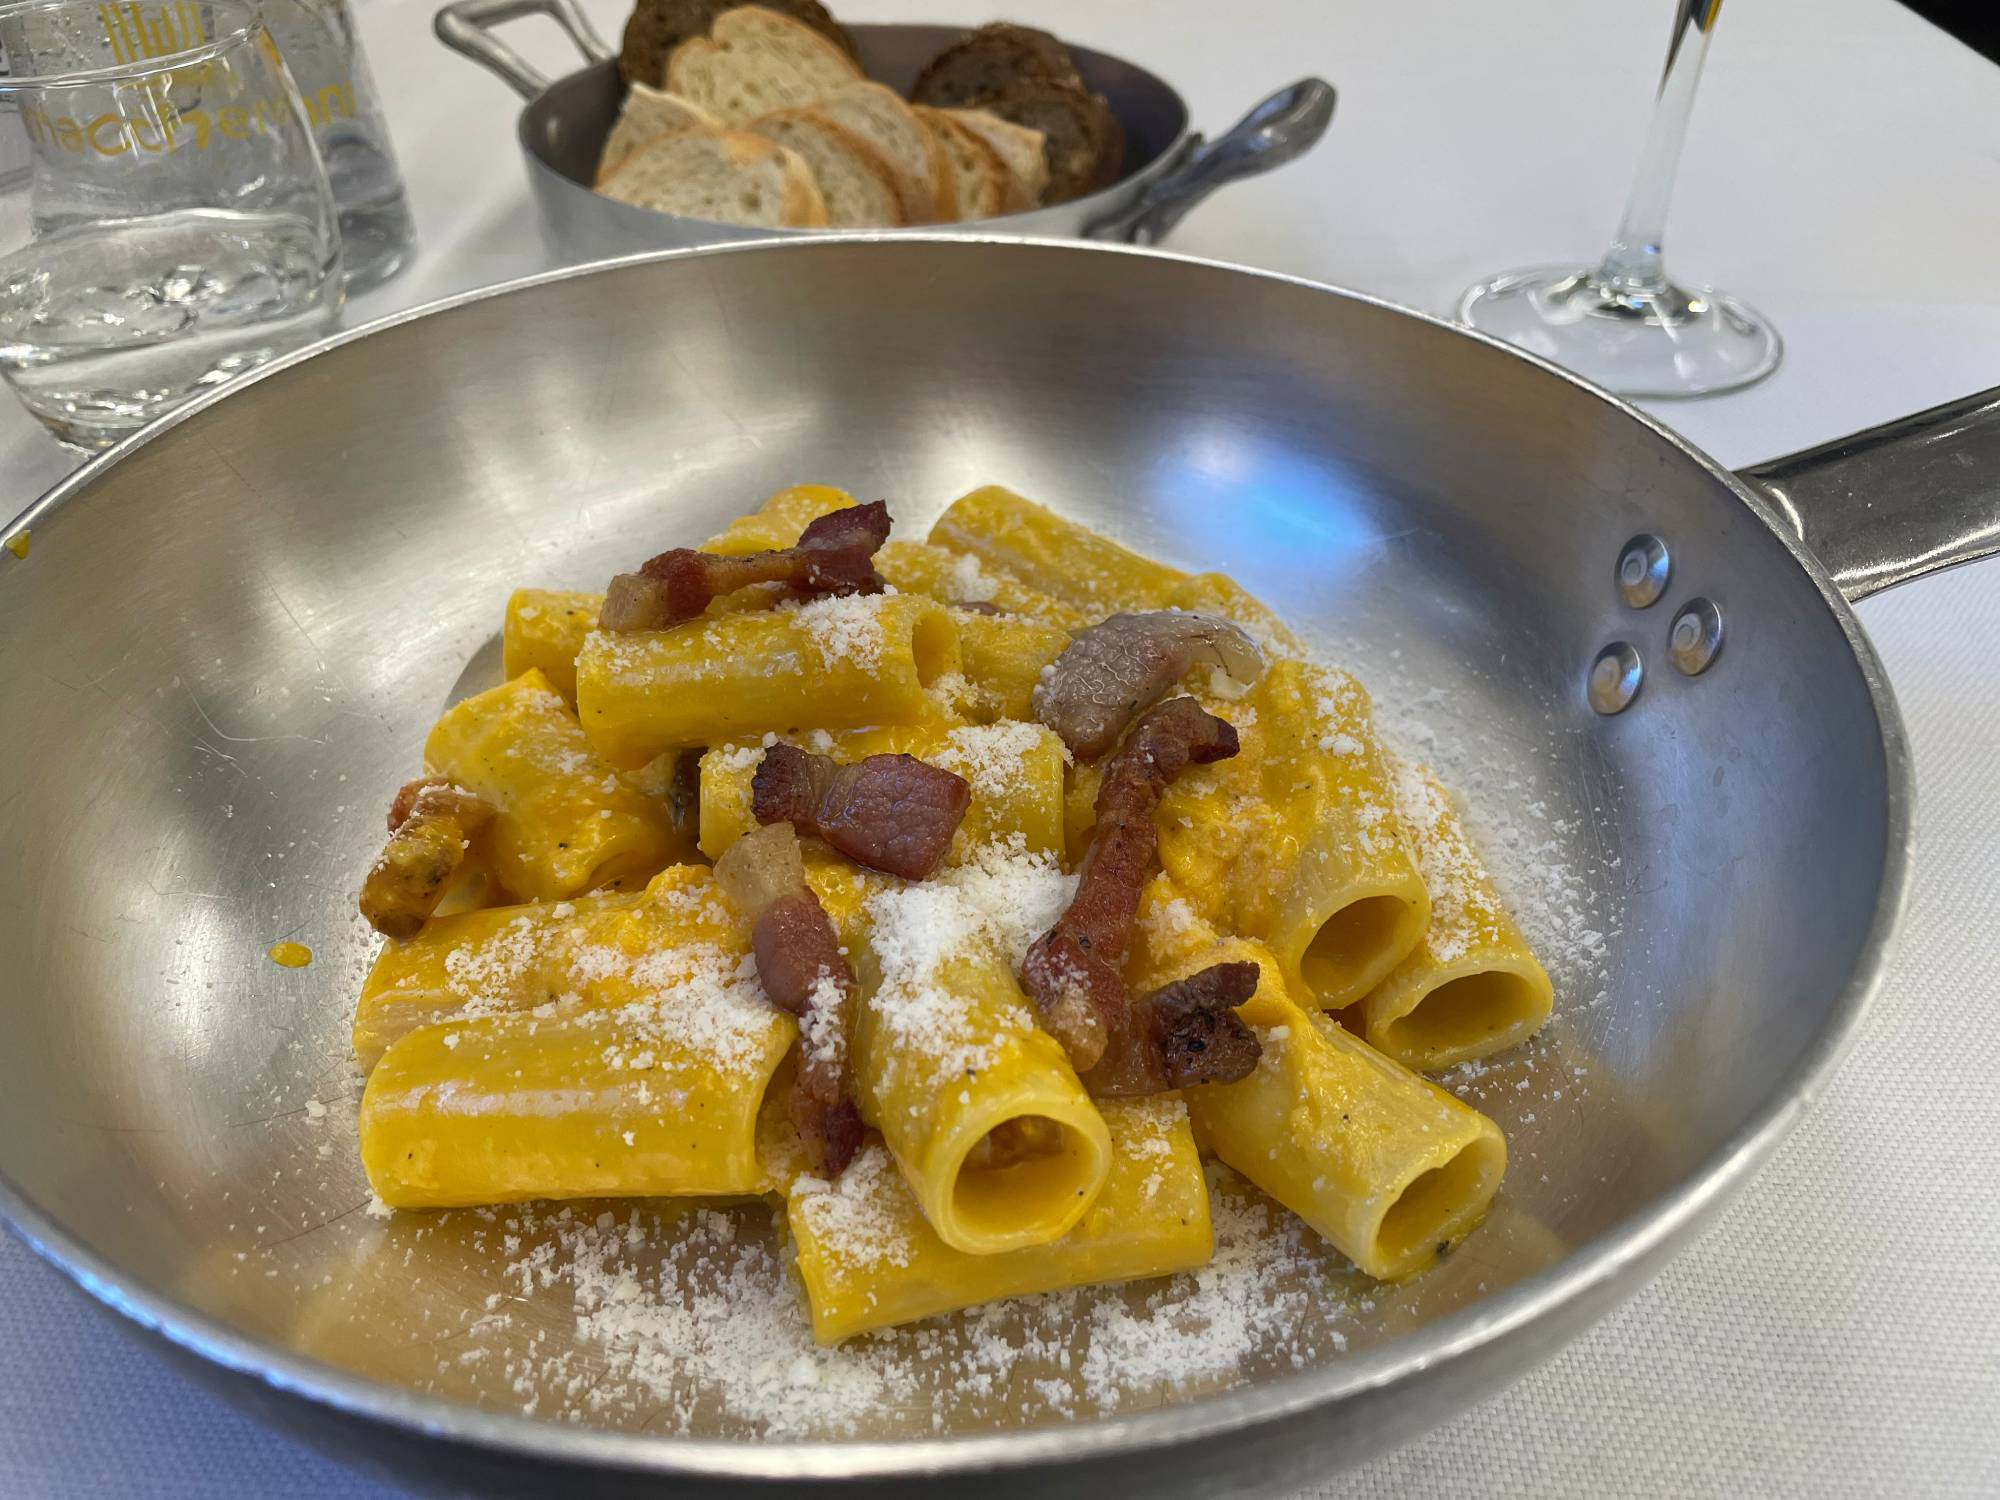 Italy [Milano] 厳選素材で作る“本当のイタリア家庭料理”をミラノから発信